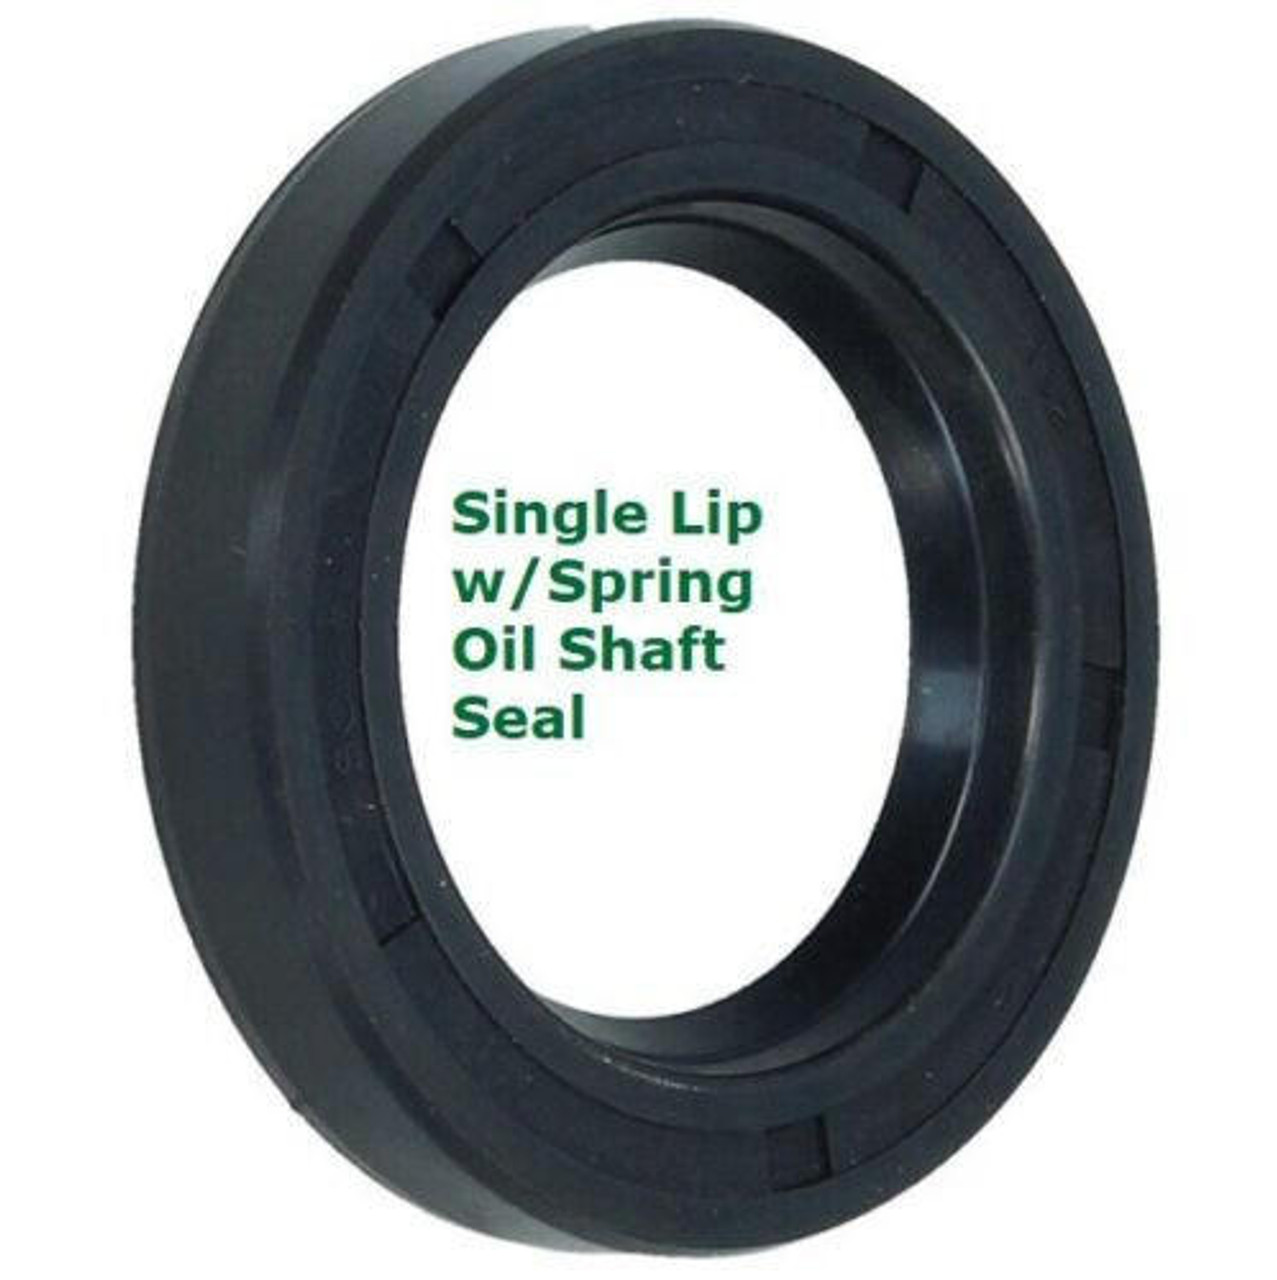 Metric Oil Shaft Seal 250 x 280 x 15mm   Single Lip   Price for 1 pc